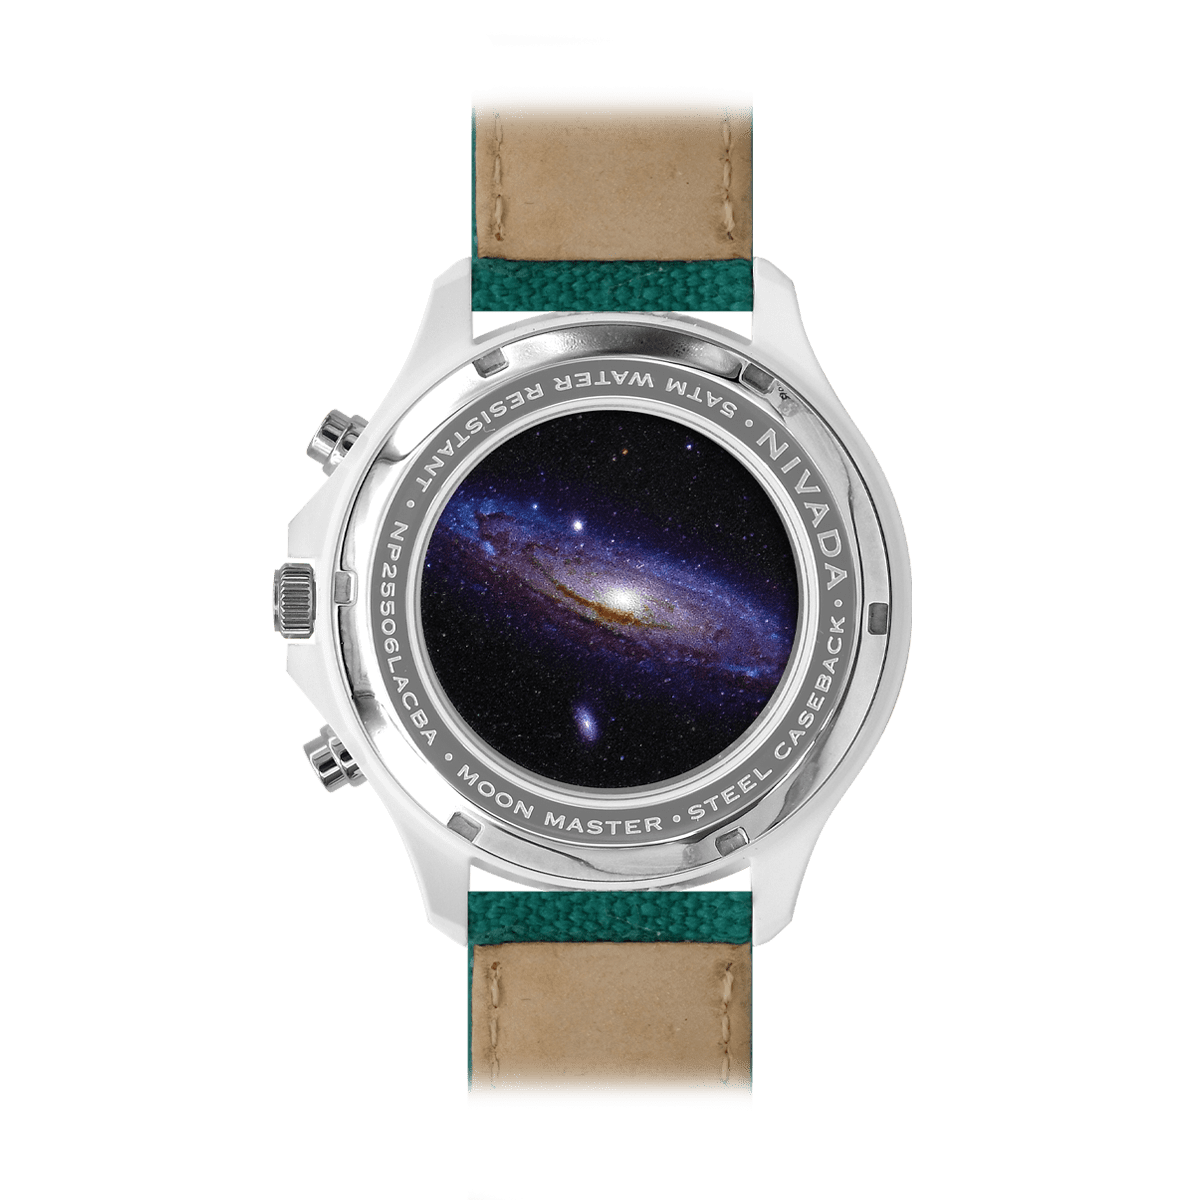 Moonmaster Cerámica Cronógrafo Verde & Rojo - Reloj Nivada Swiss